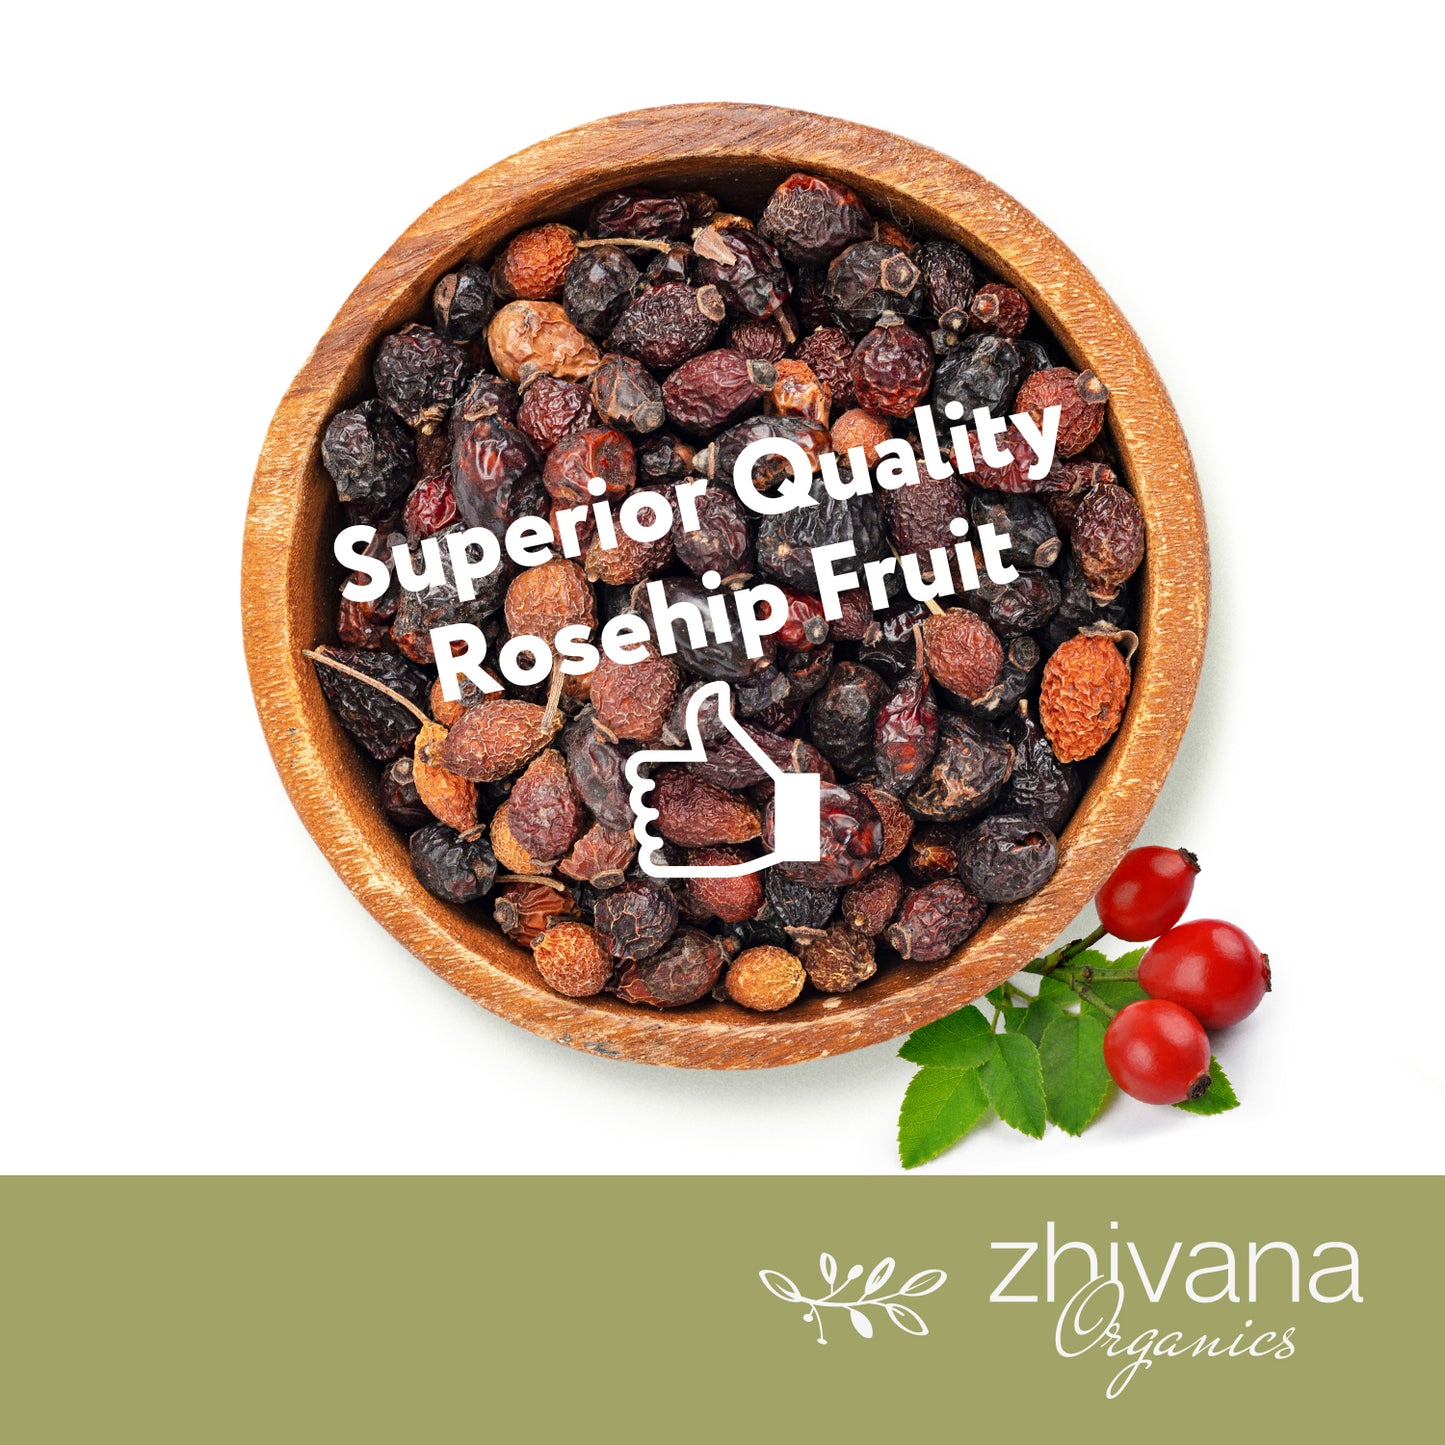 Rosehip Fruit Whole Dried - Zhivana Organics